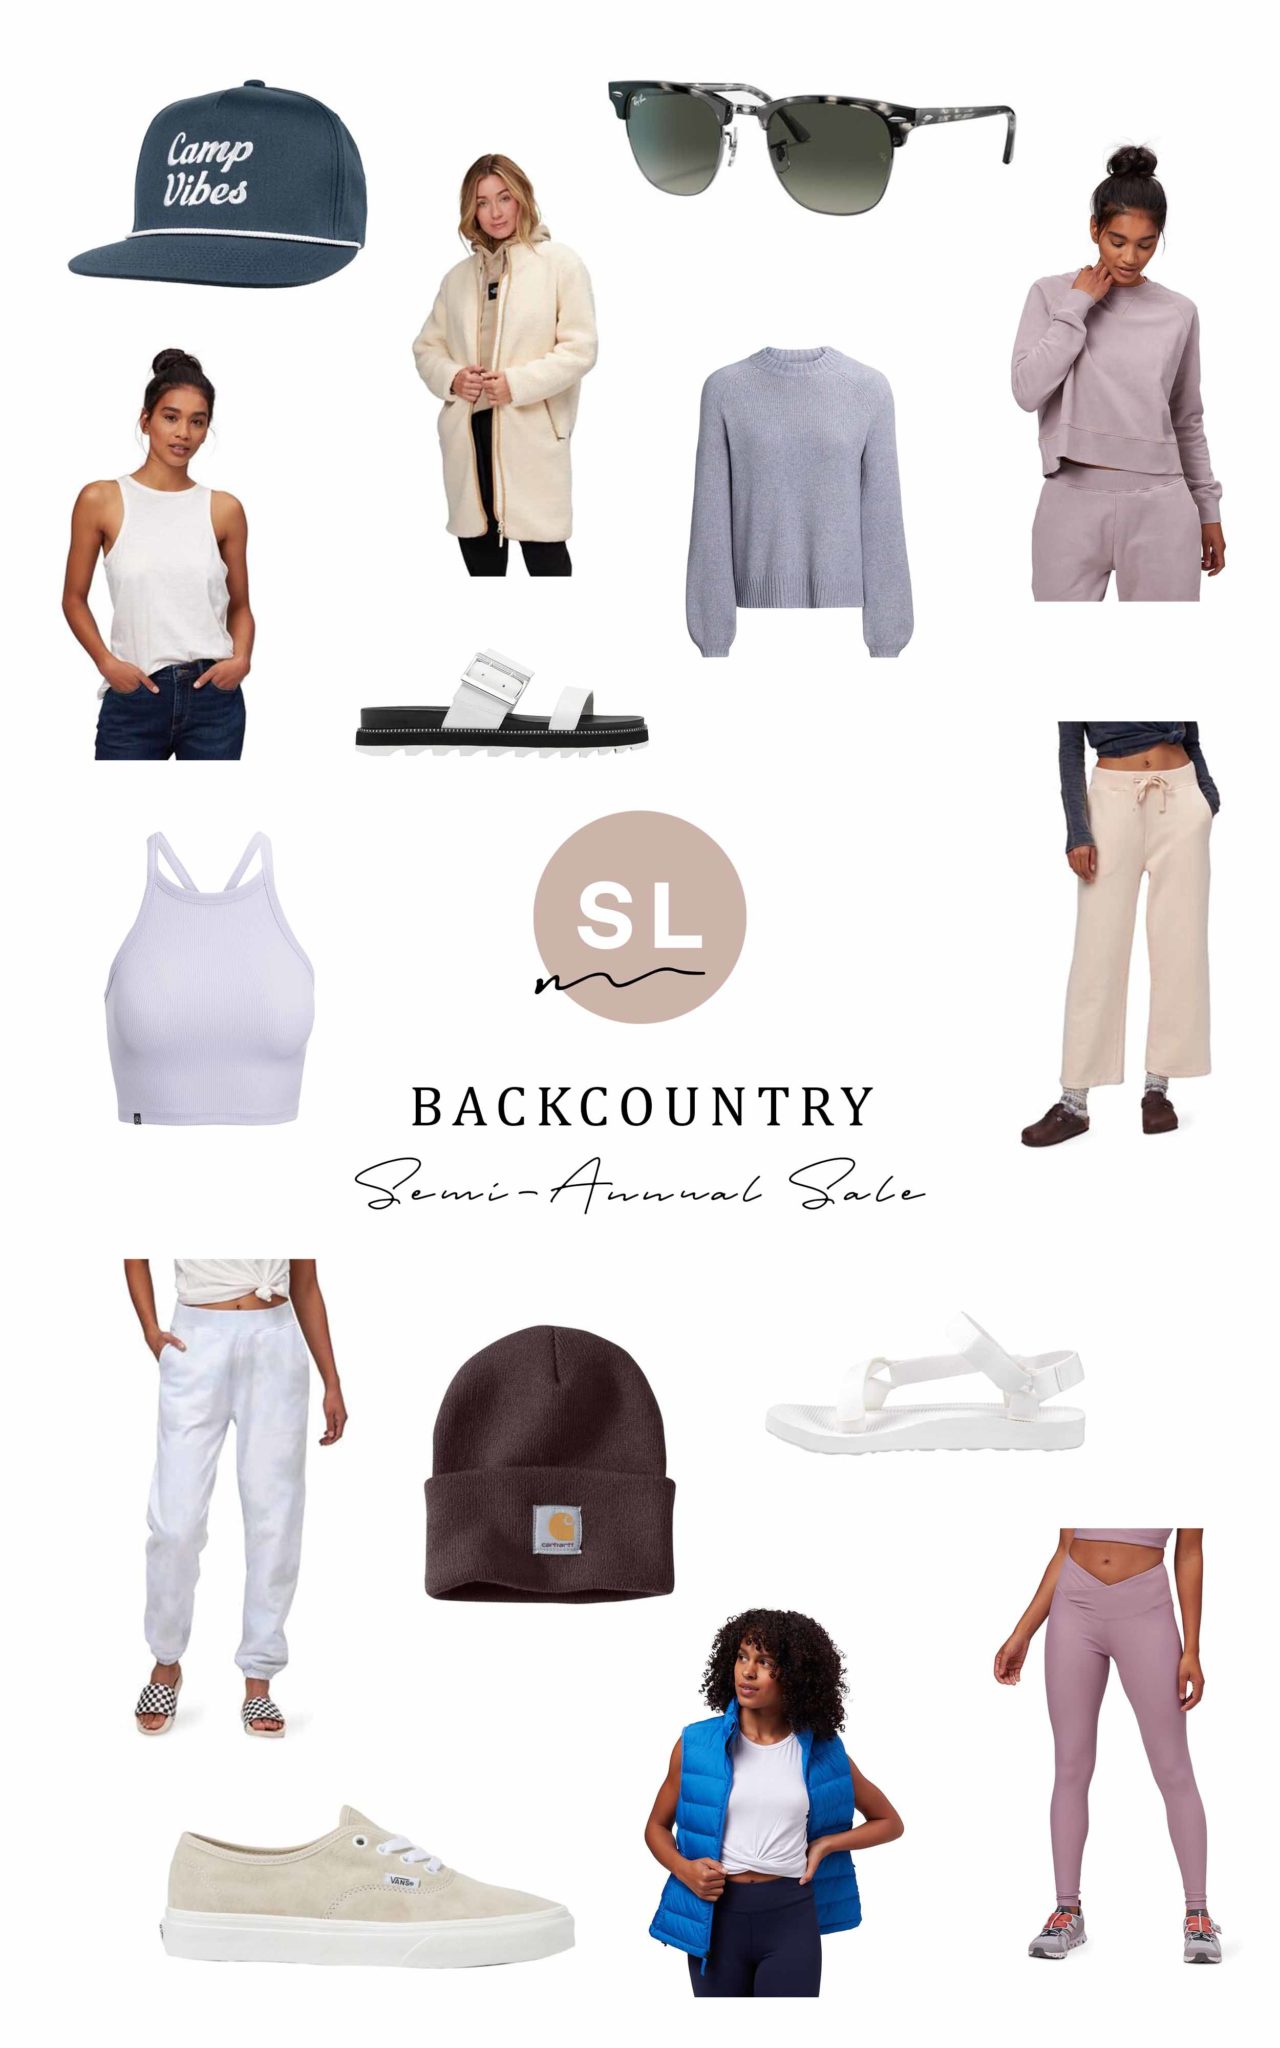 The Backcountry Semi-Annual Sale